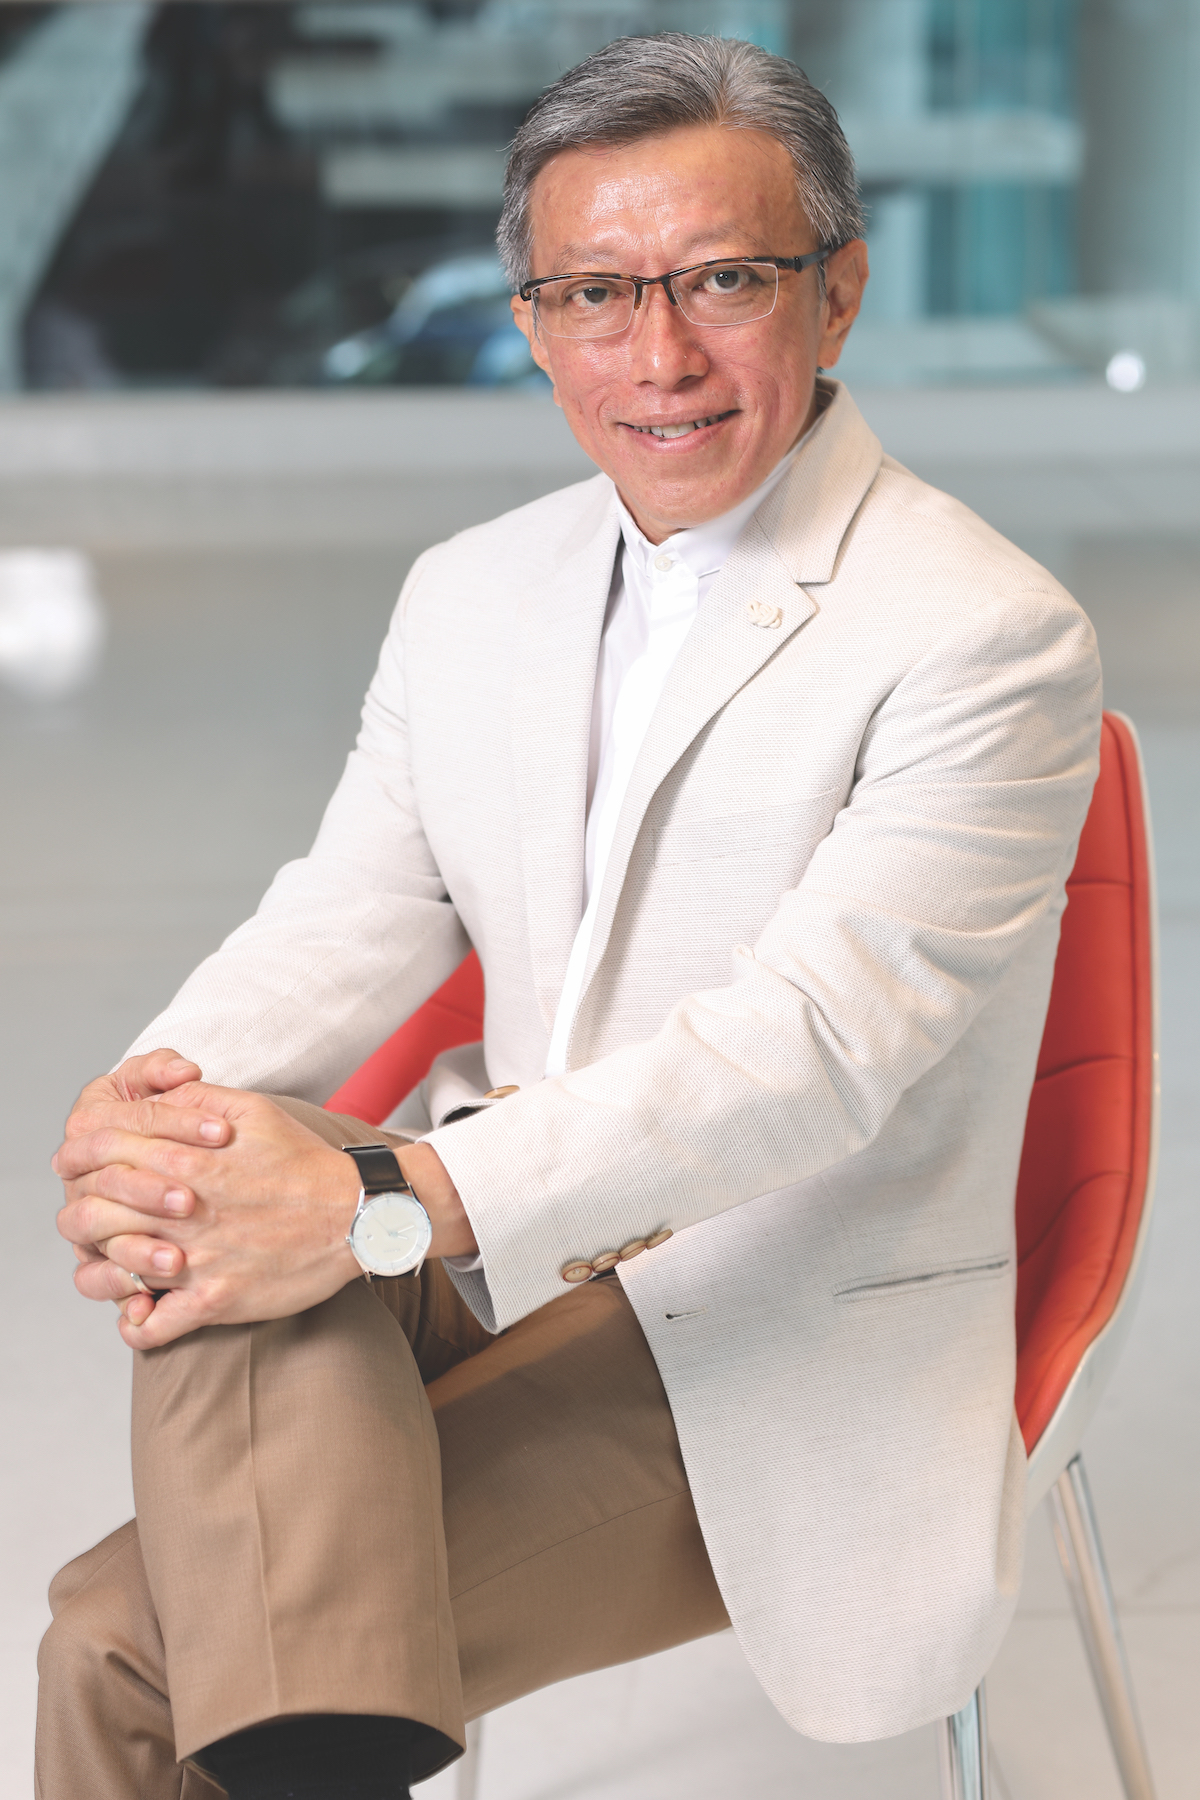 Koh Ching Hong, Chief Executive of Borneo Motors Singapore